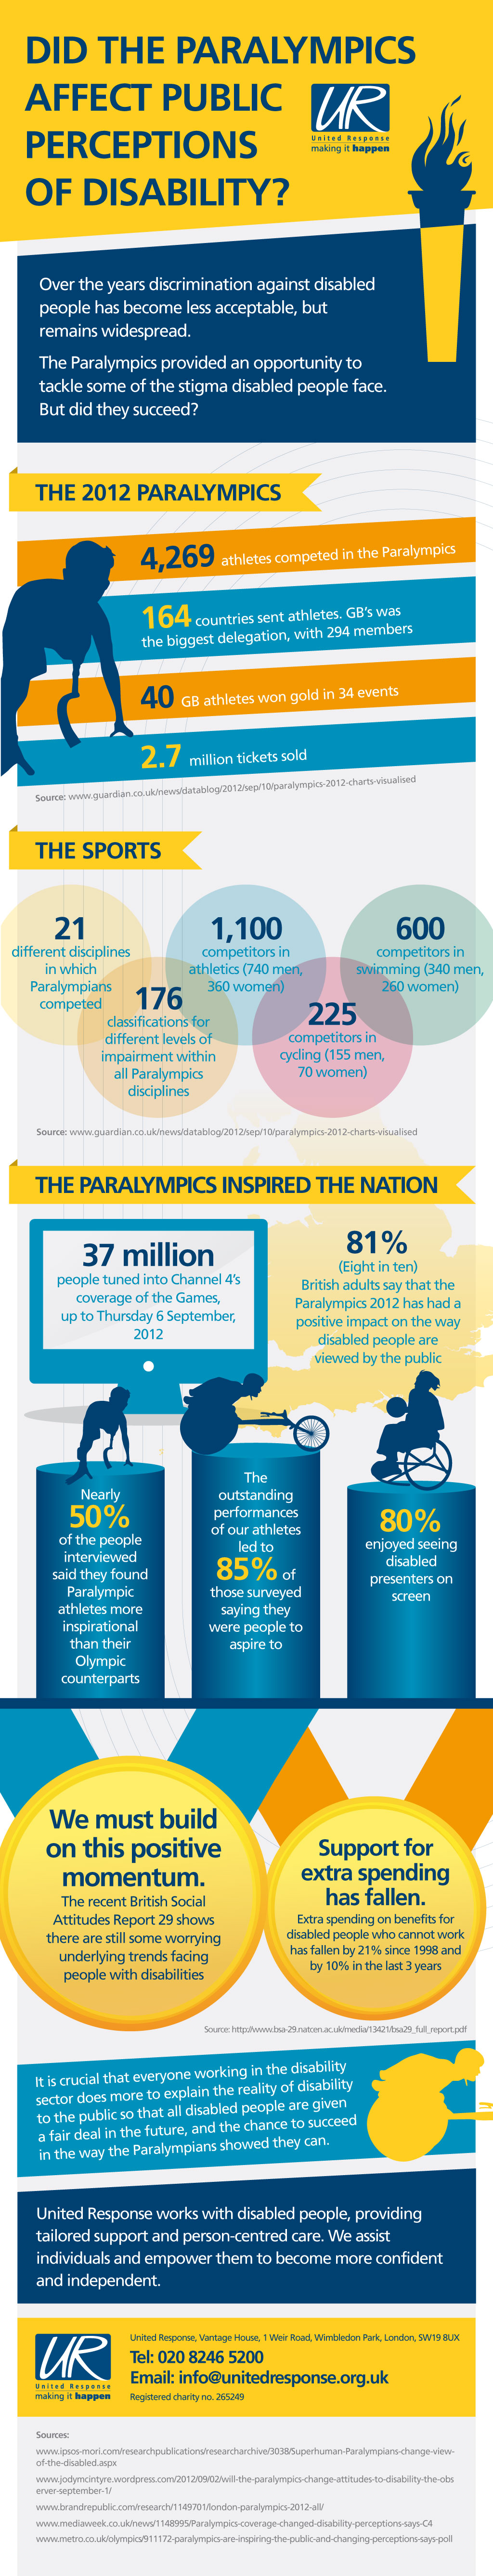 Paralympics Infographic_V4_2